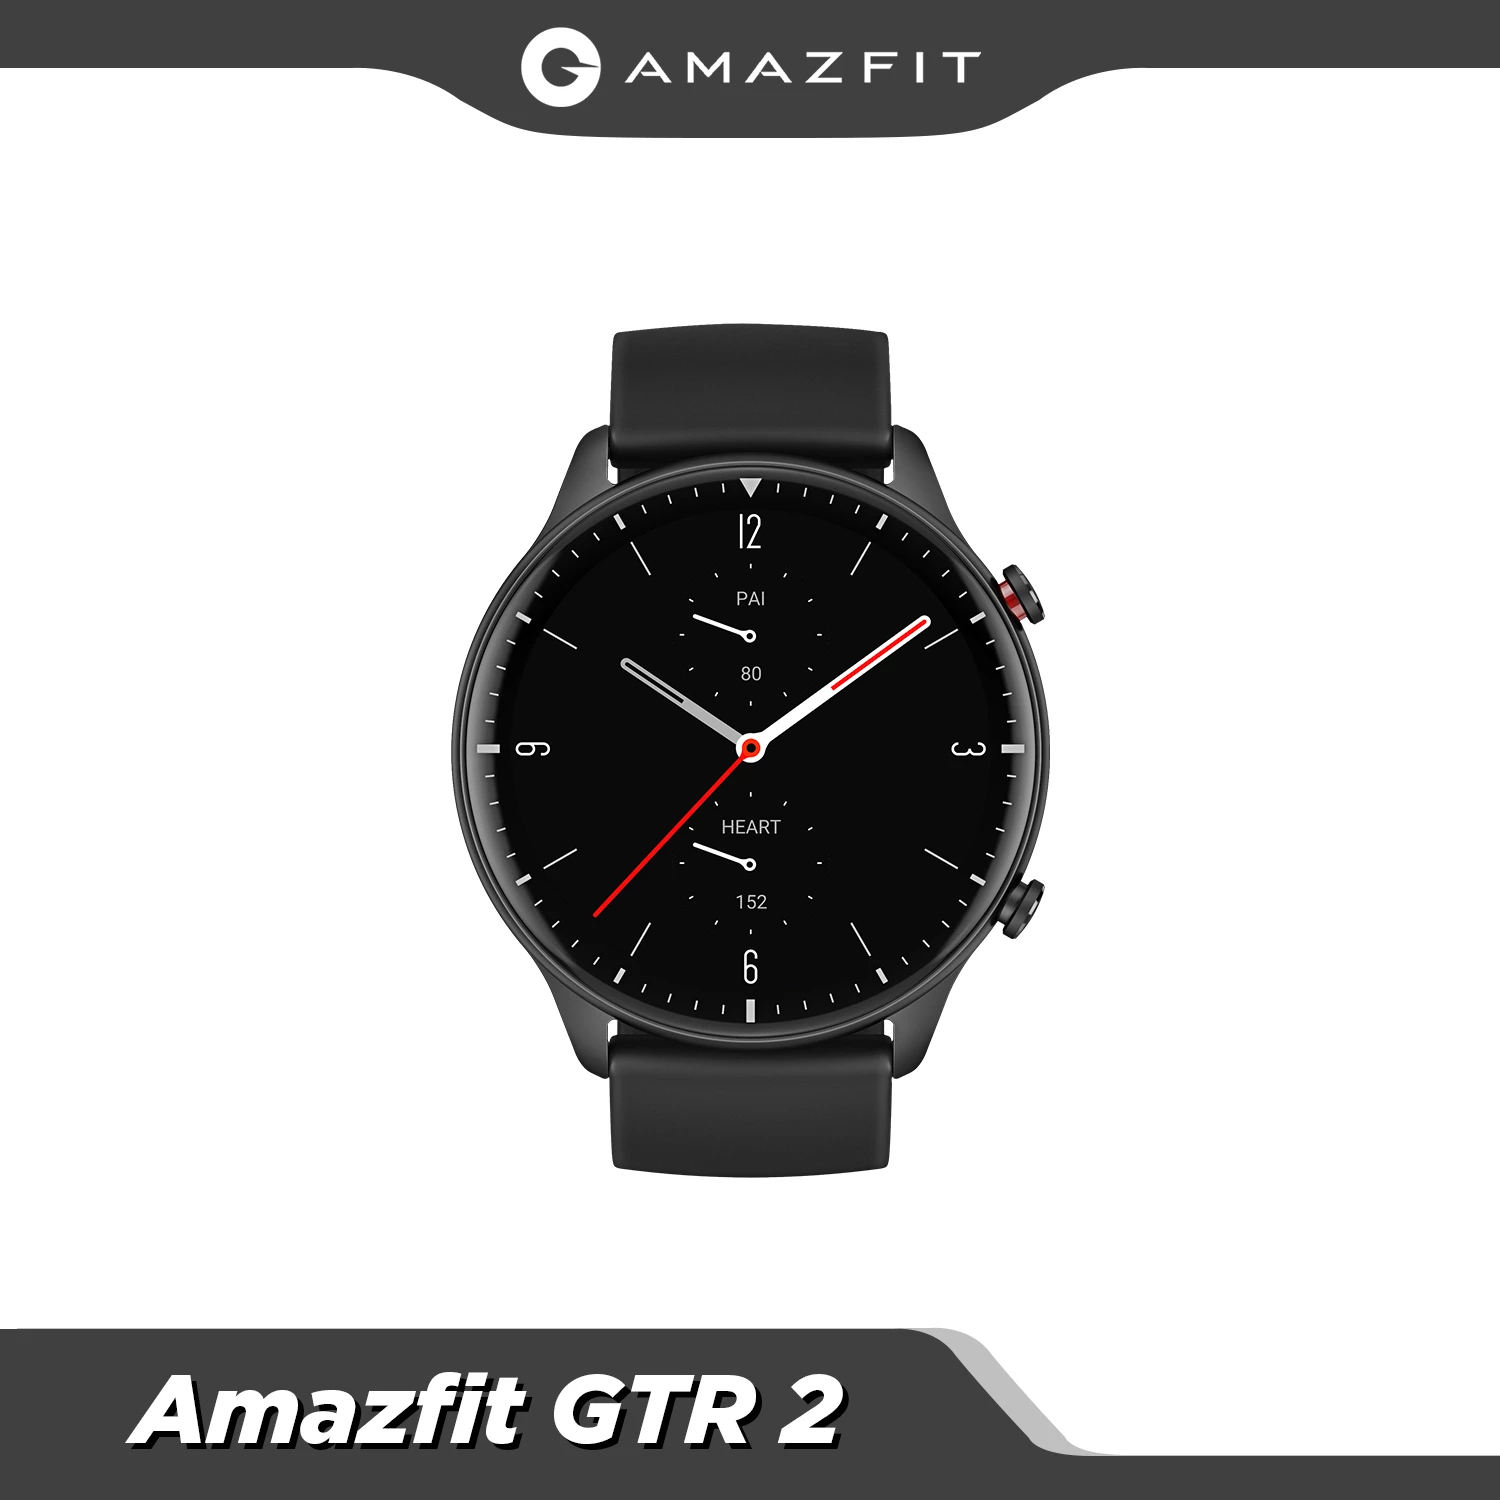 Global-Amazfit-GTR-2-Fitness-Smartwatch-Bluetooth-Call-14-Days-Battery-Life-326ppi-AMOLED-Display-Music-5.jpg_Q90-5.jpg_.webp-5